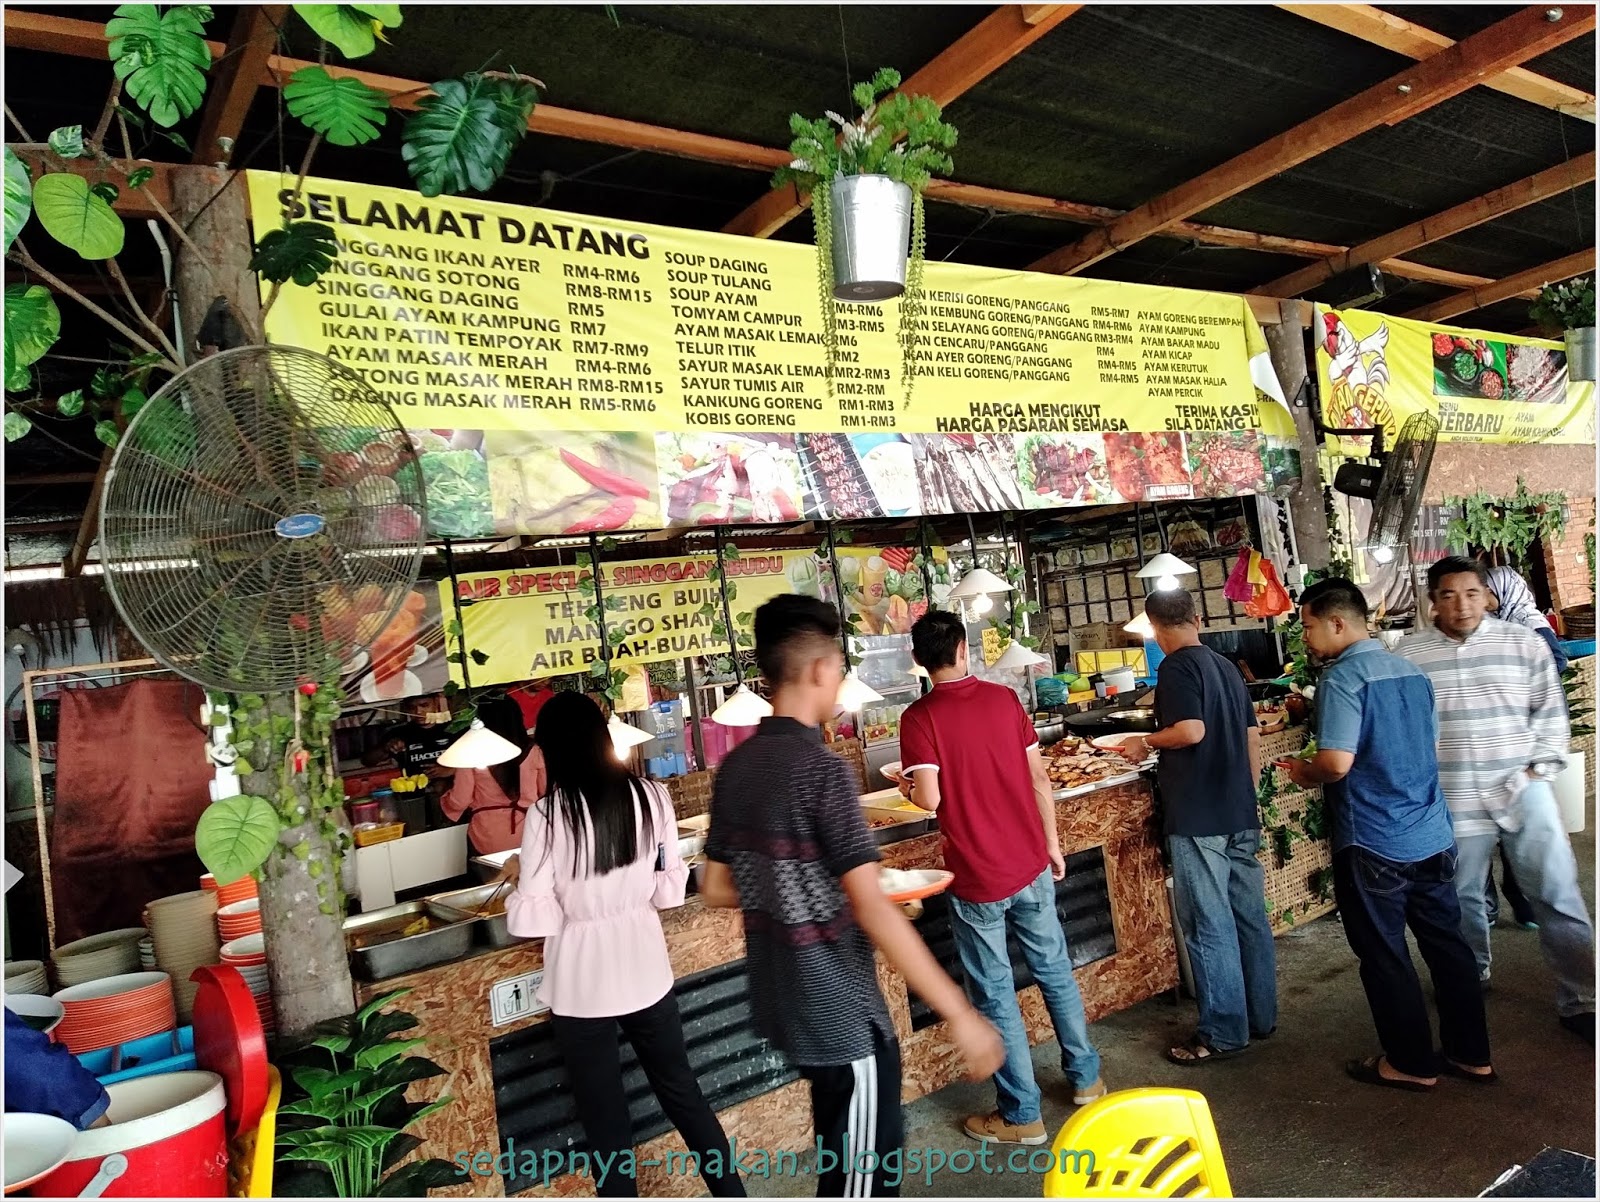 MaKaN JiKa SeDaP: Makan tengahari di Restoran Singgang ...